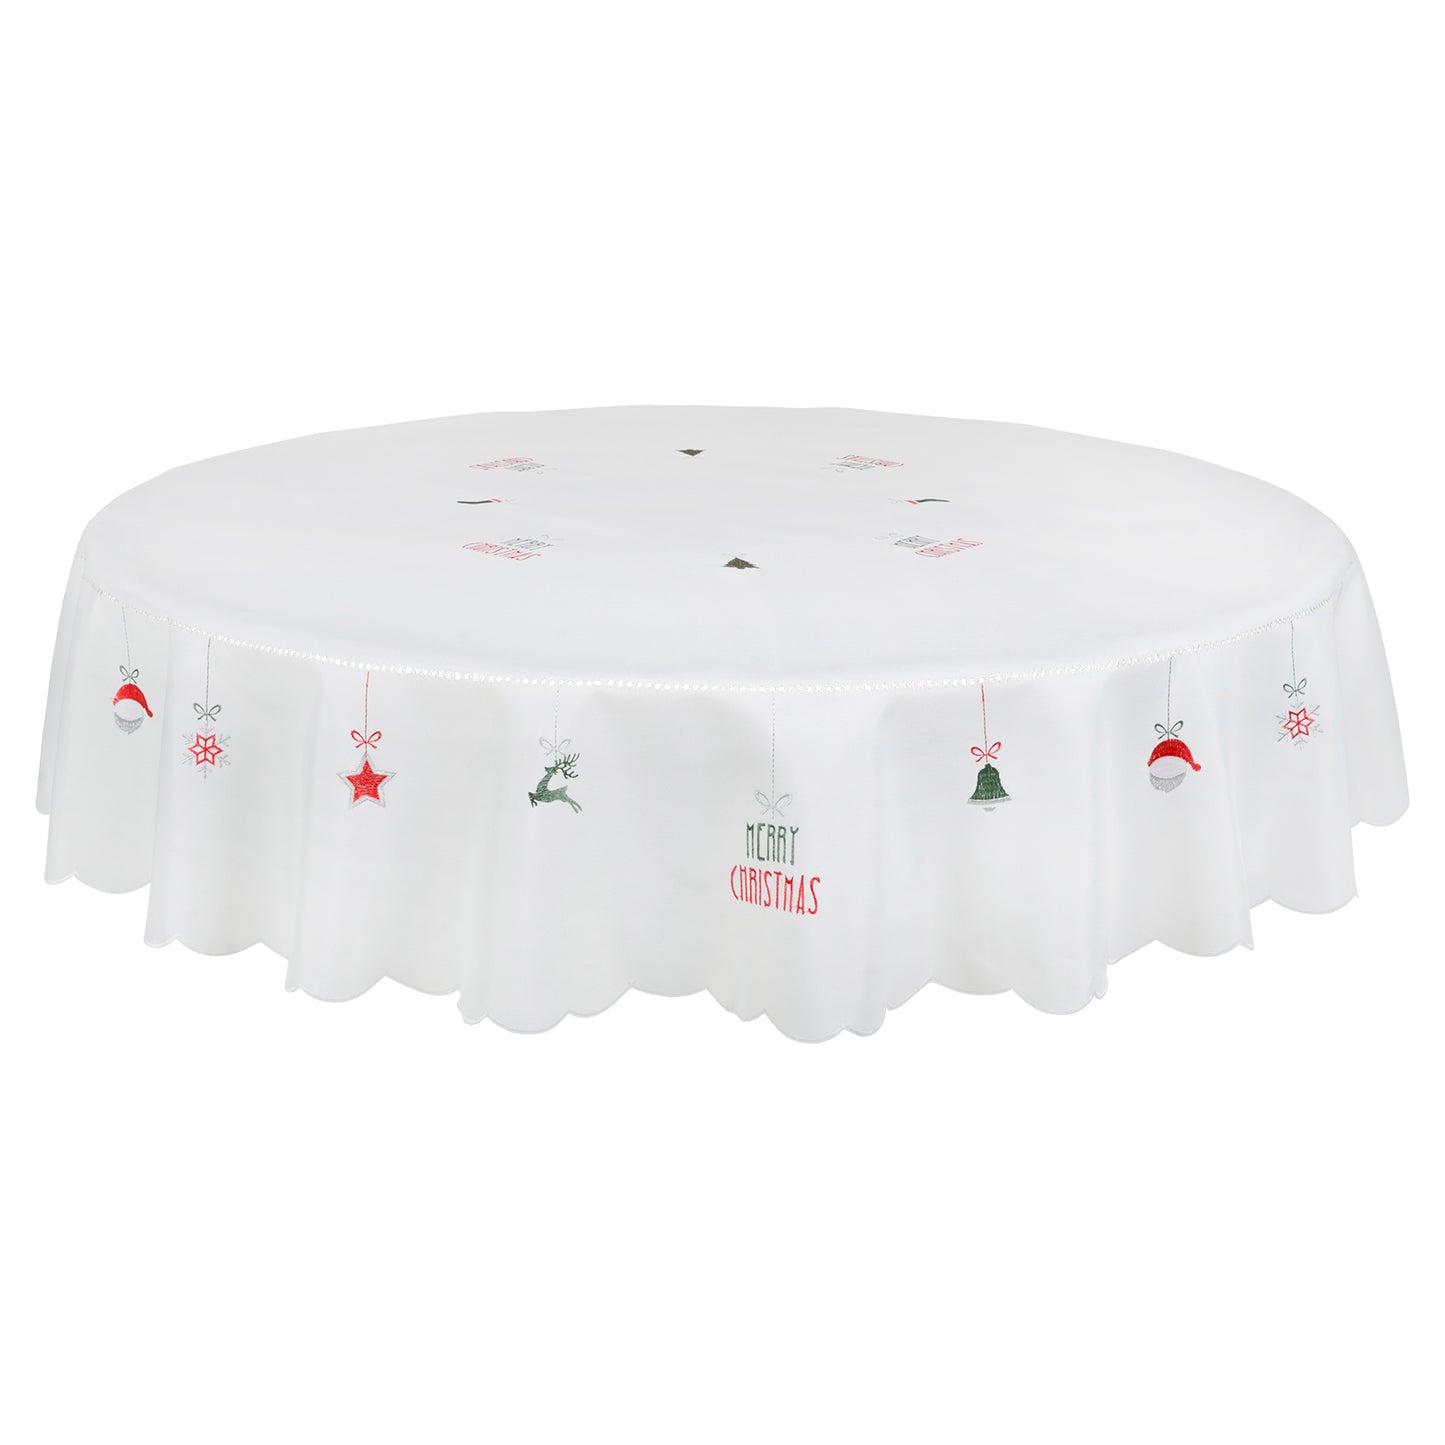 Mr Crimbo Fun Merry Christmas Embroidered Tablecloth - MrCrimbo.co.uk -XS5893 - White -christmas home decor